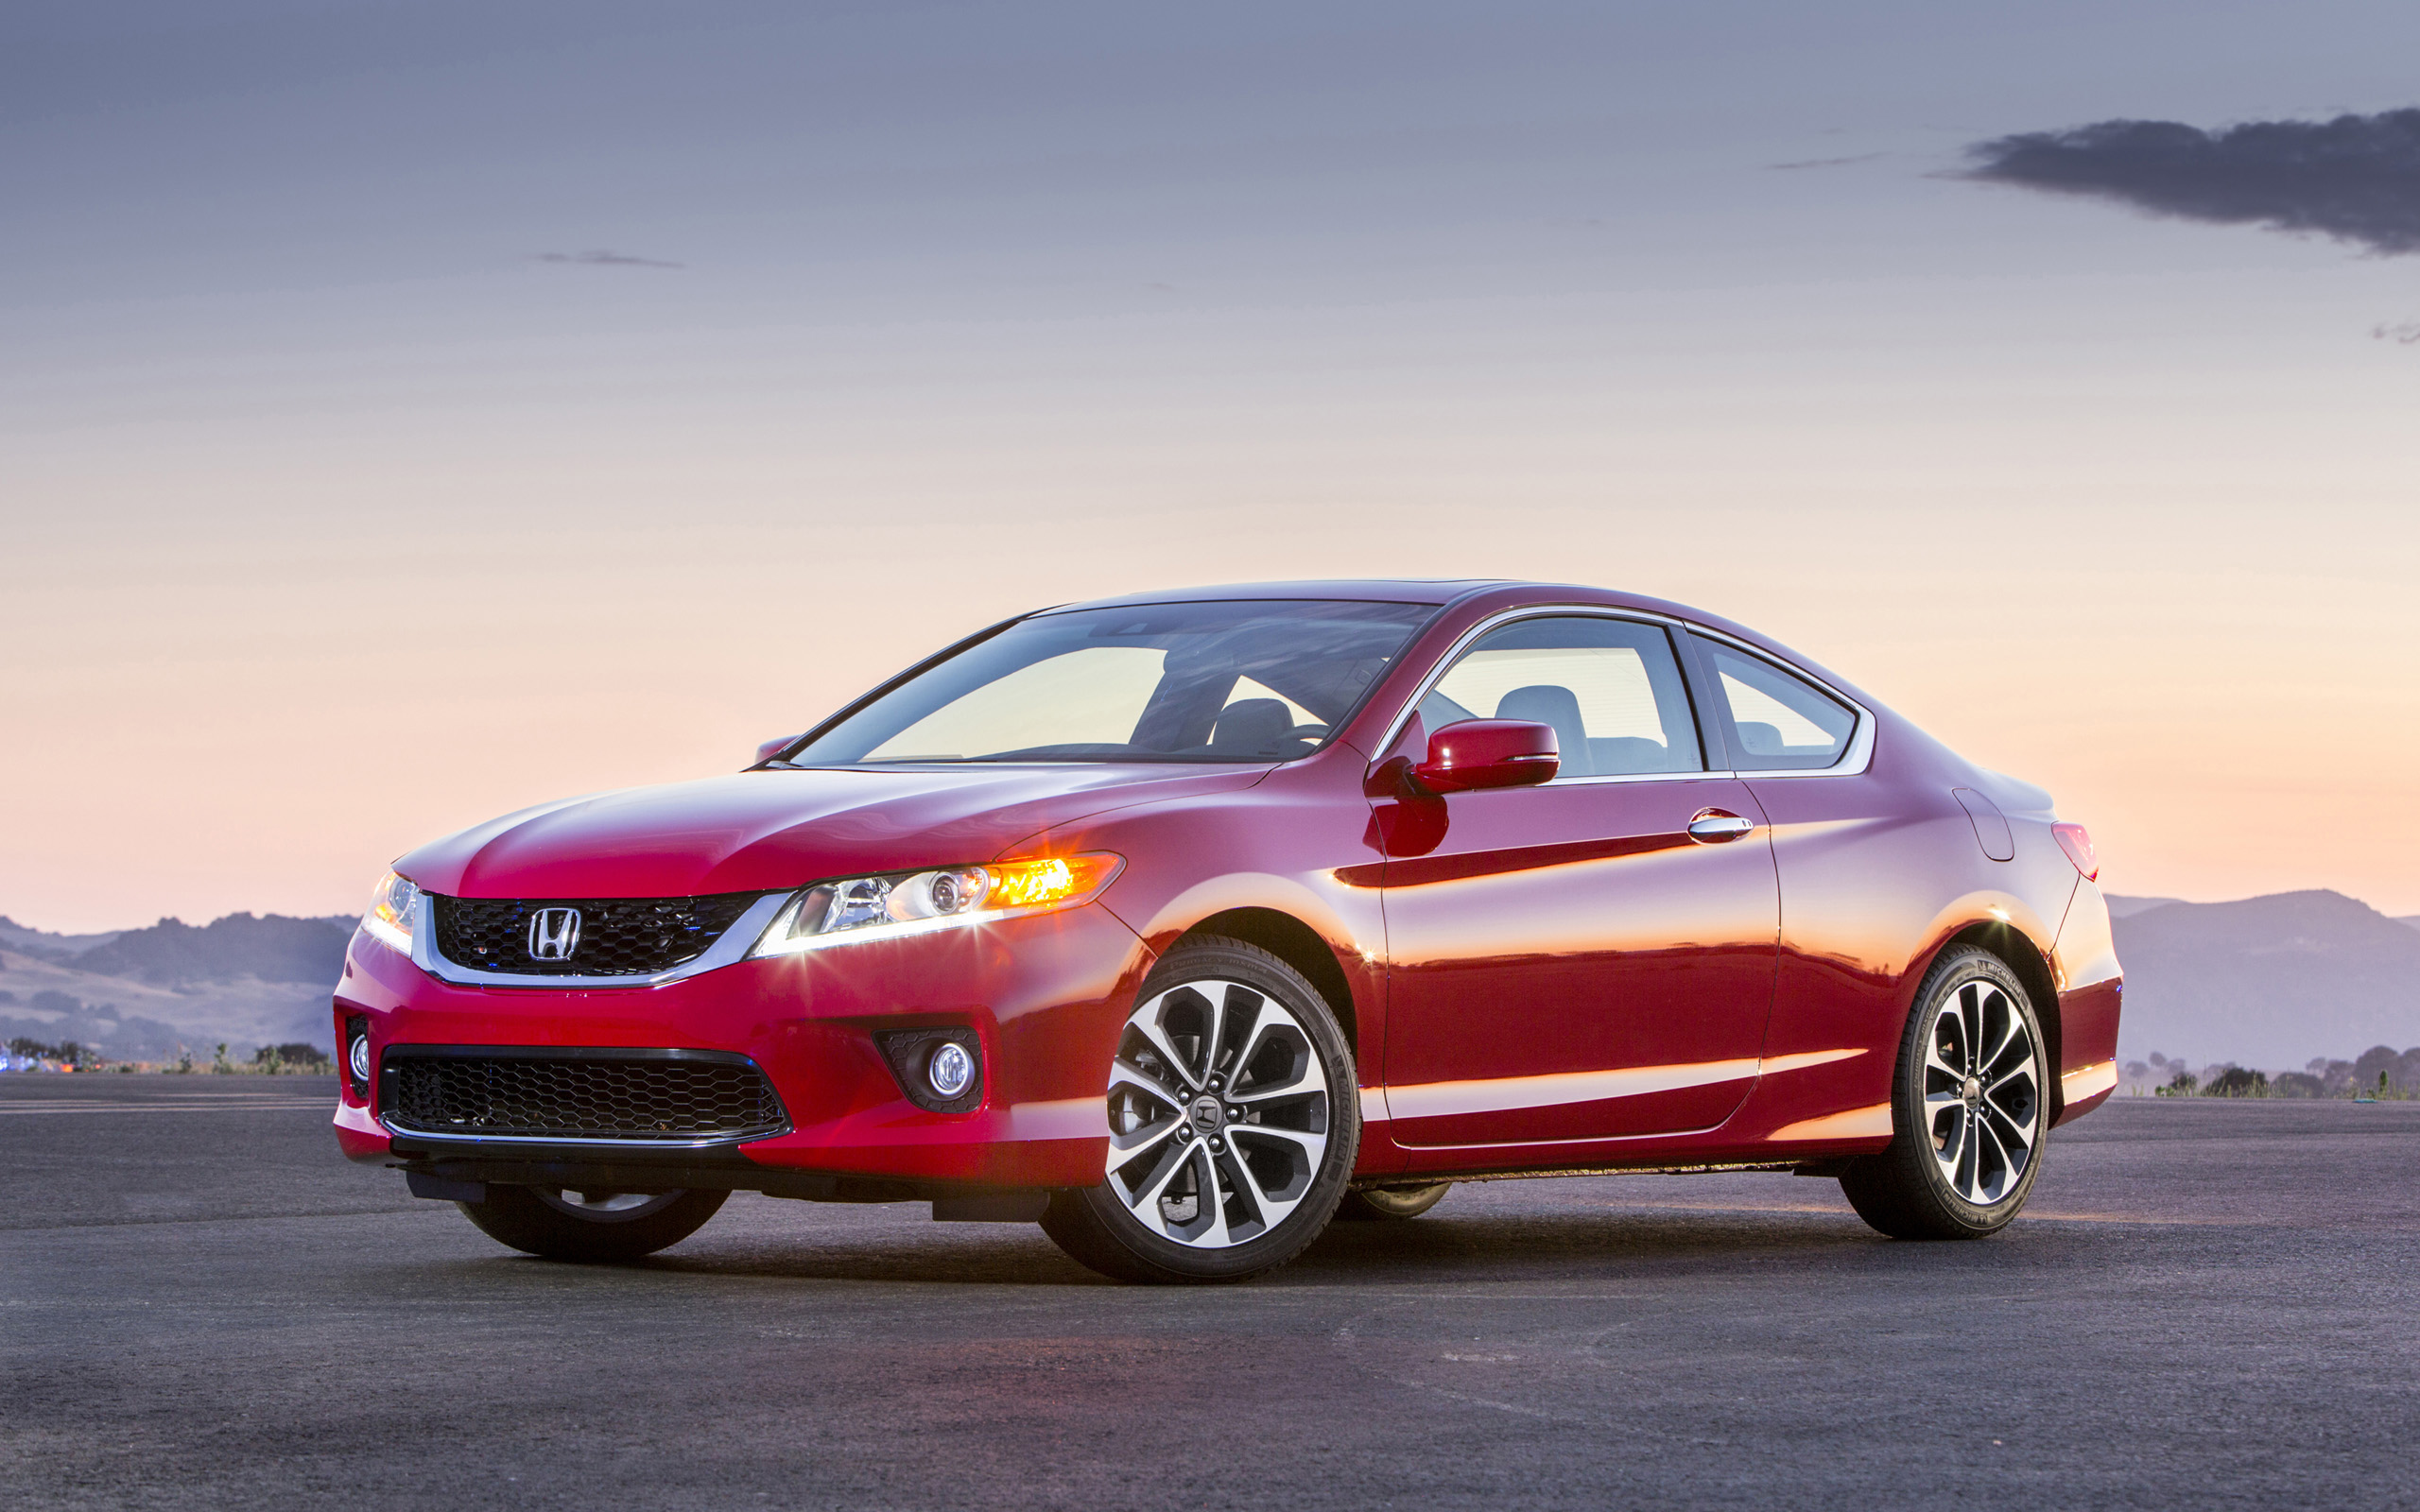 2013 Honda accord coupe v6 videos #6